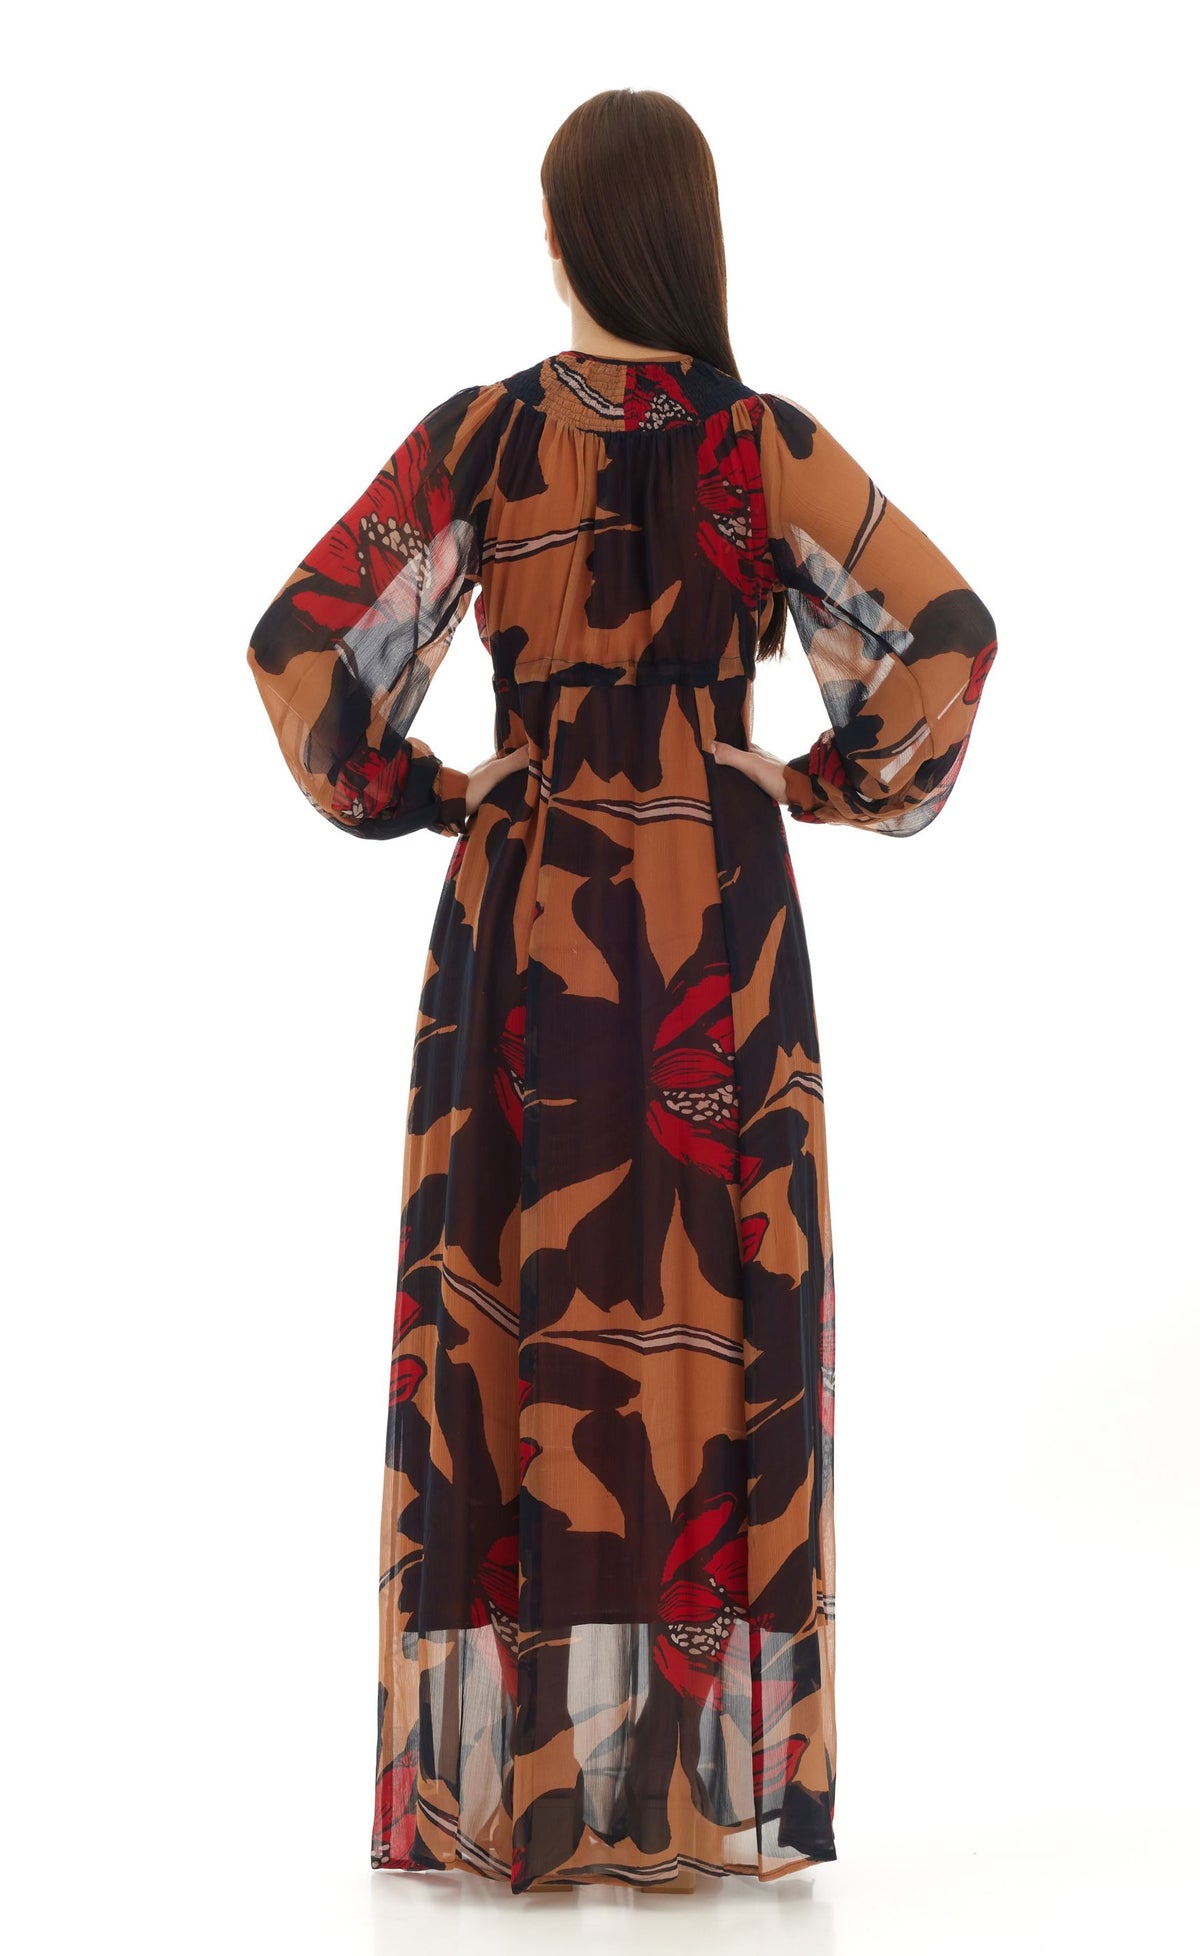 ORANGE & BROWN FLORAL KAFTAN DRESS